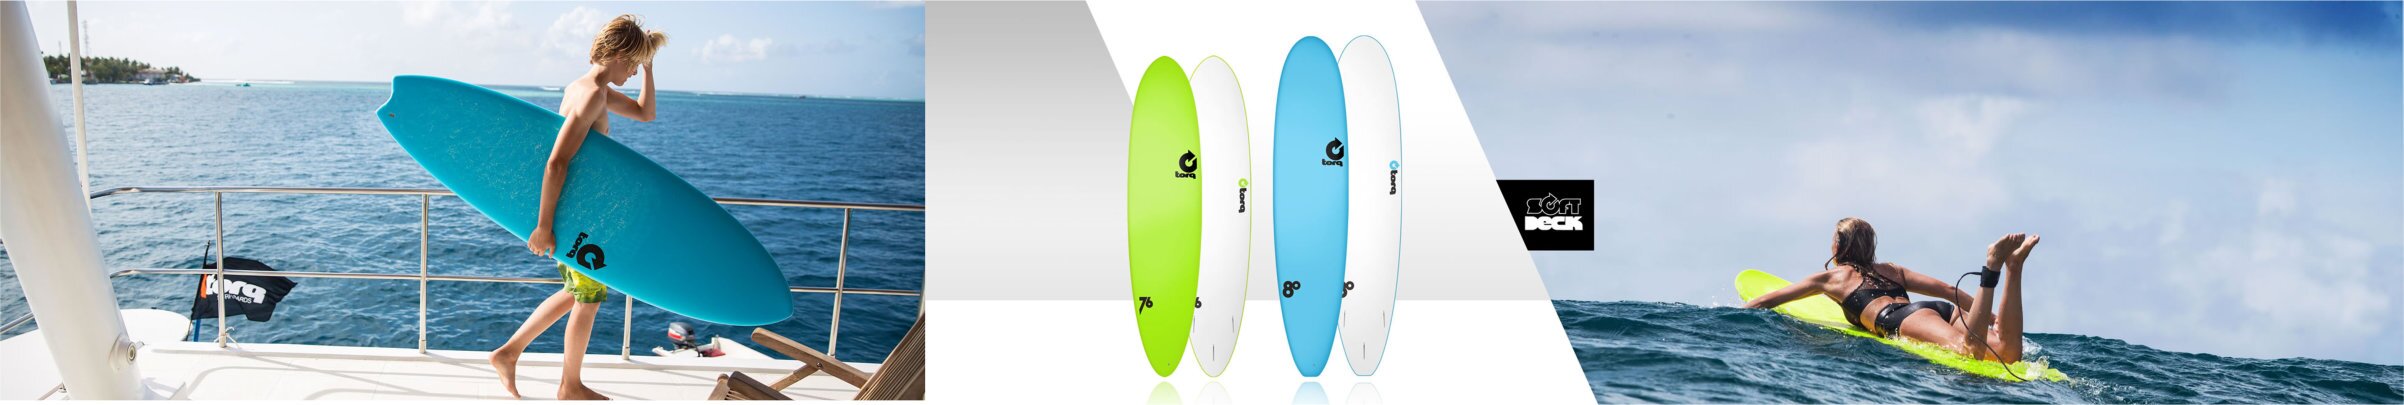 softboard softdeck foamie surfboard slider